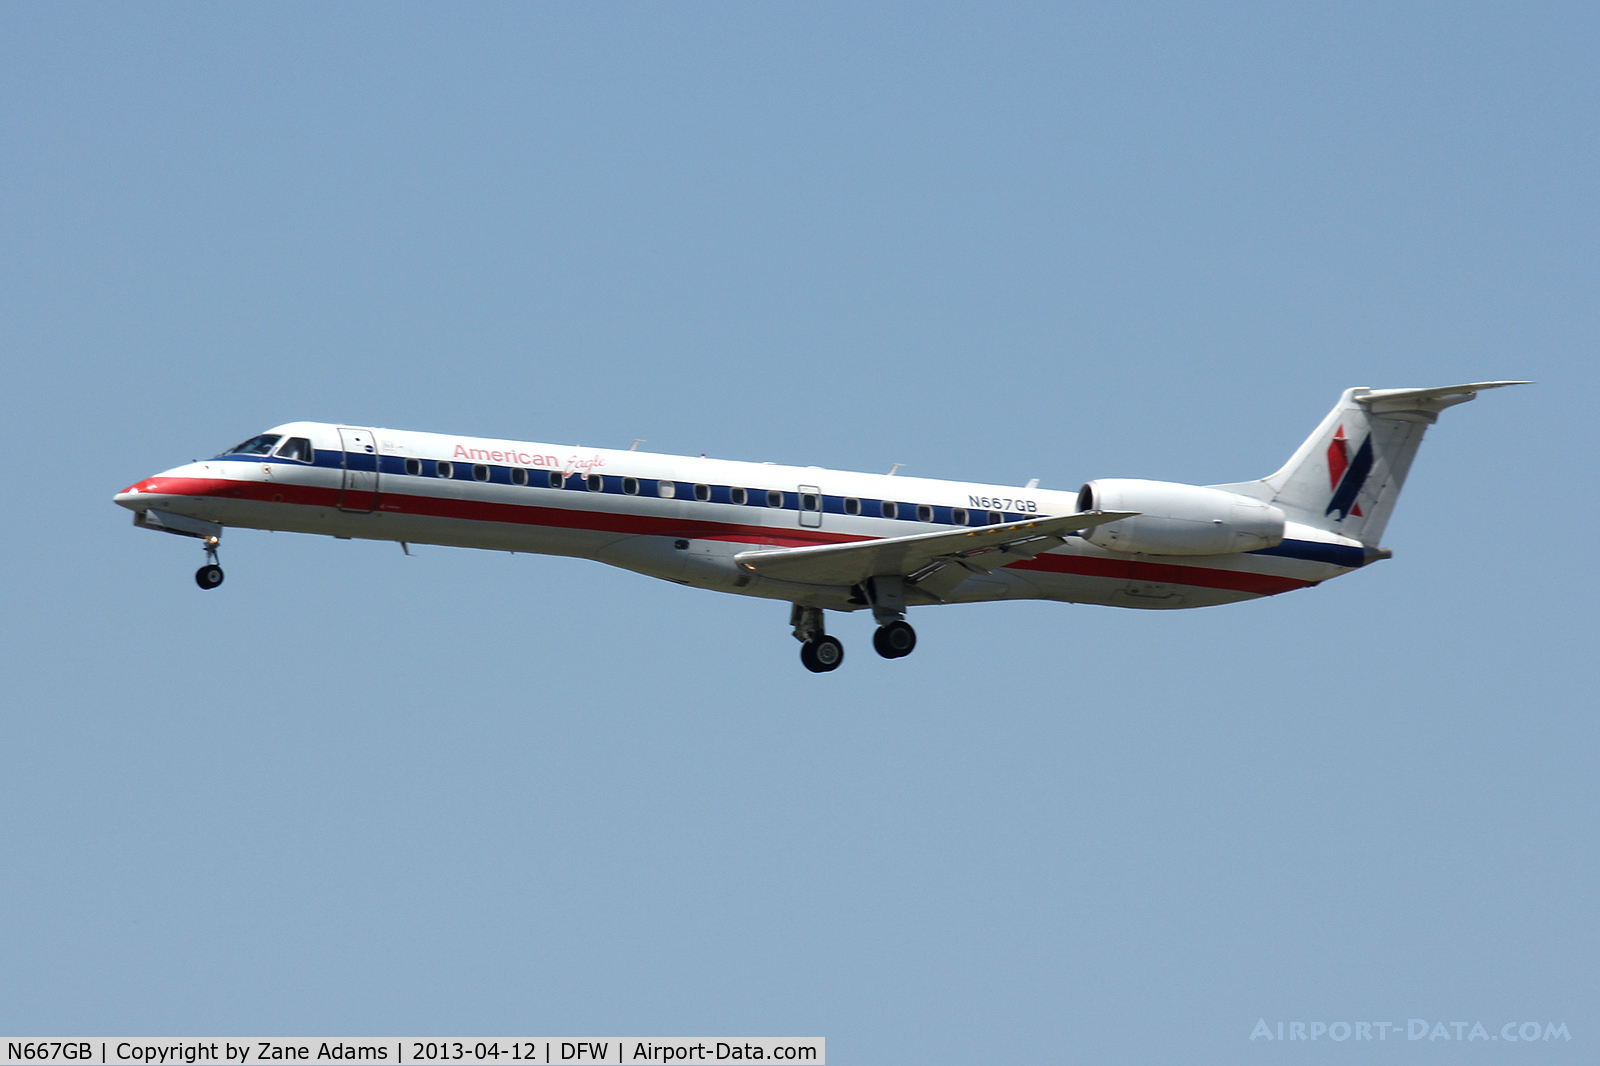 N667GB, 2004 Embraer ERJ-145LR (EMB-145LR) C/N 145784, American Eagle landing at DFW Airport